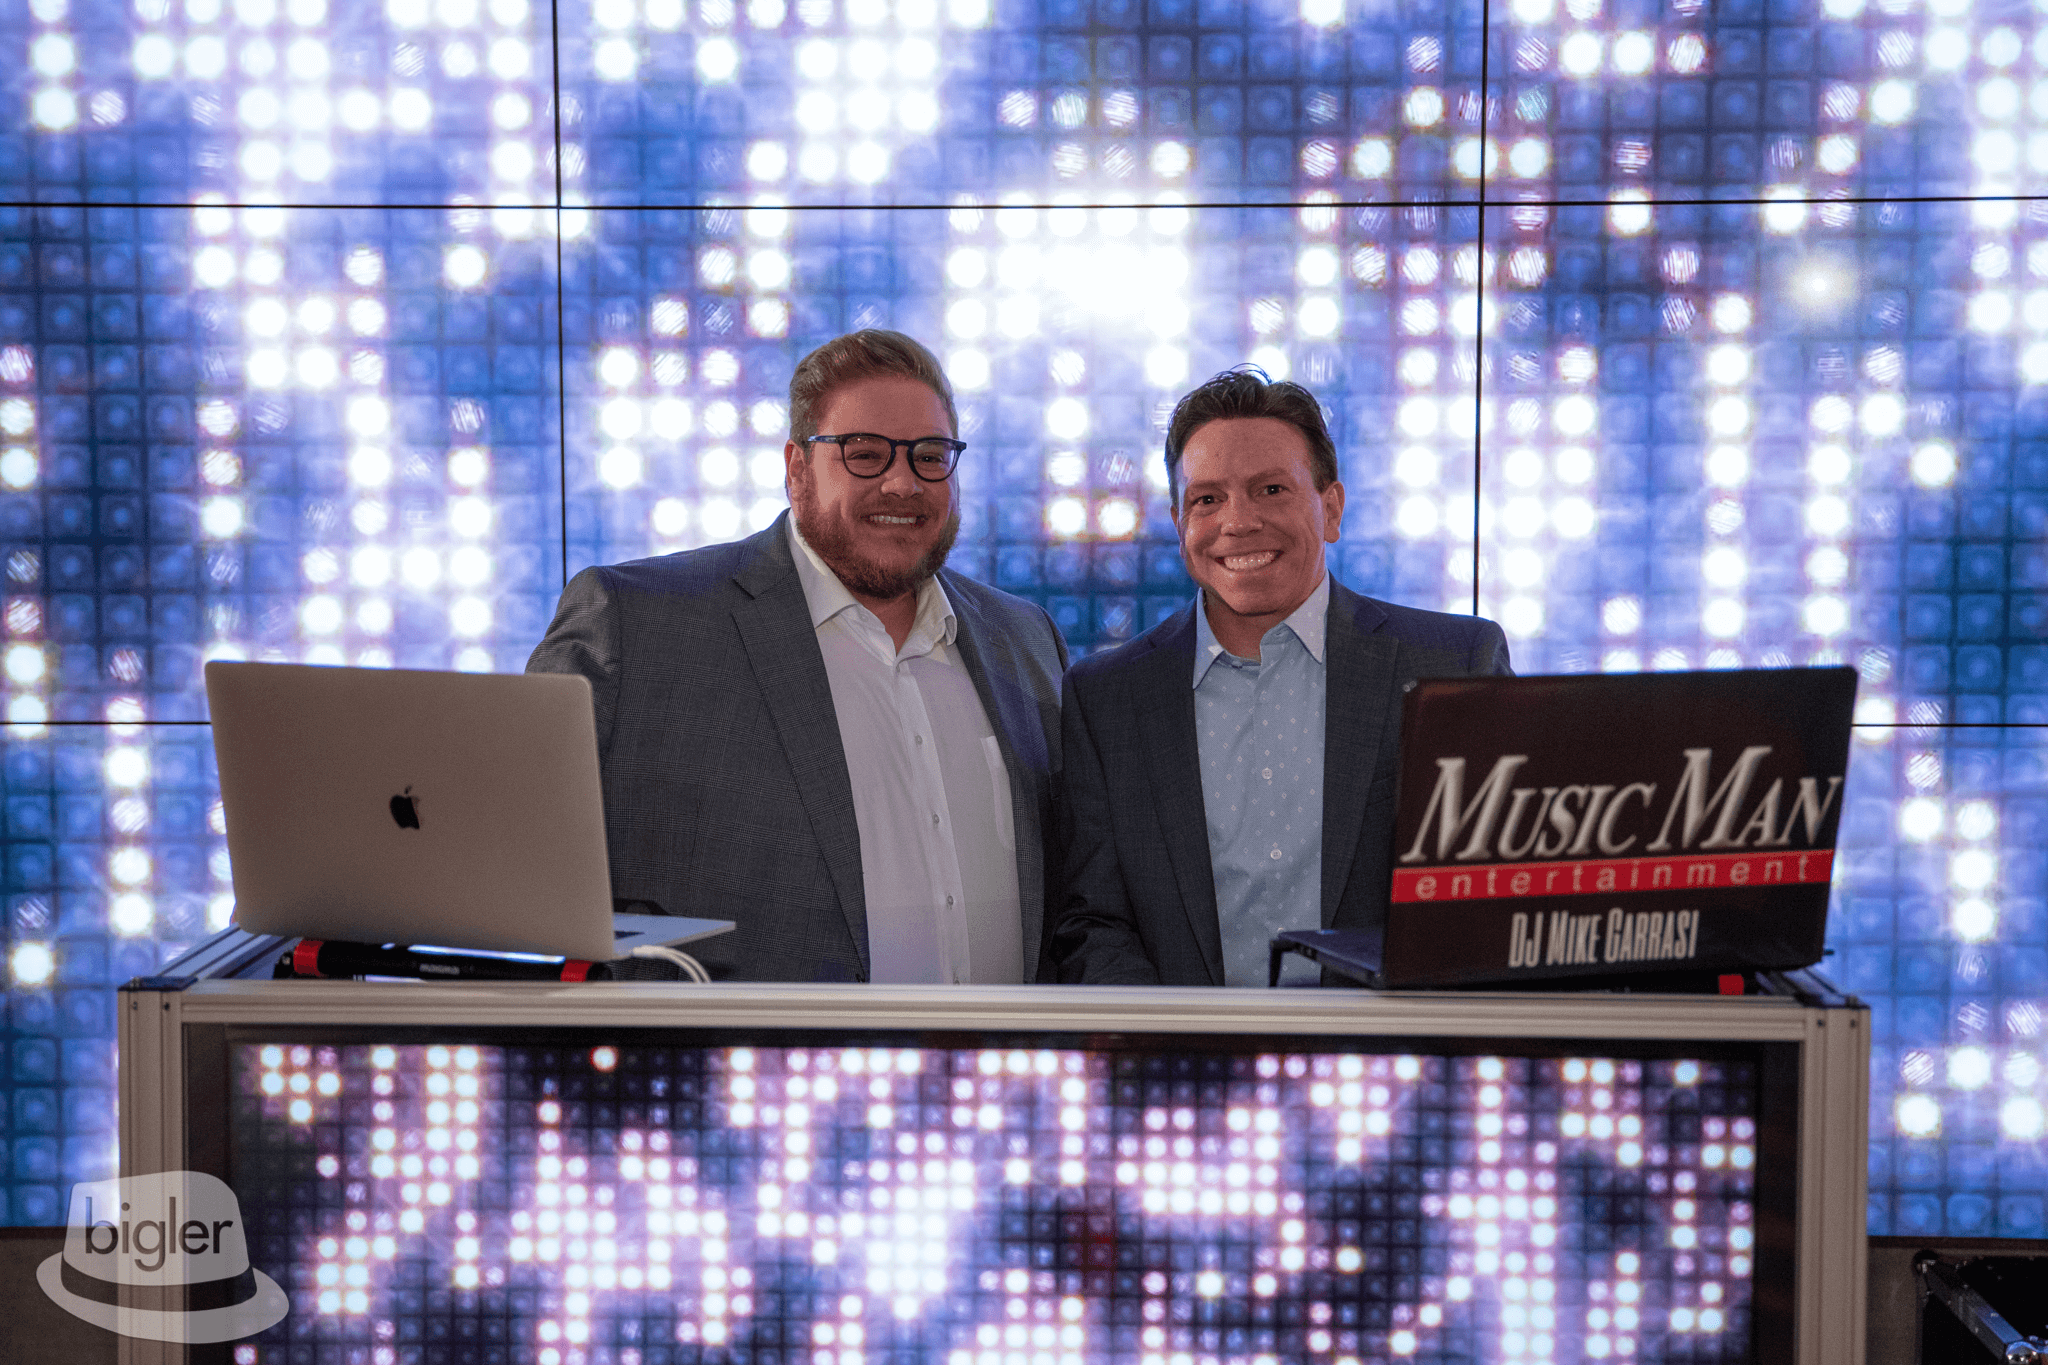 DJ Steven Simboli & DJ Mike Garrasi